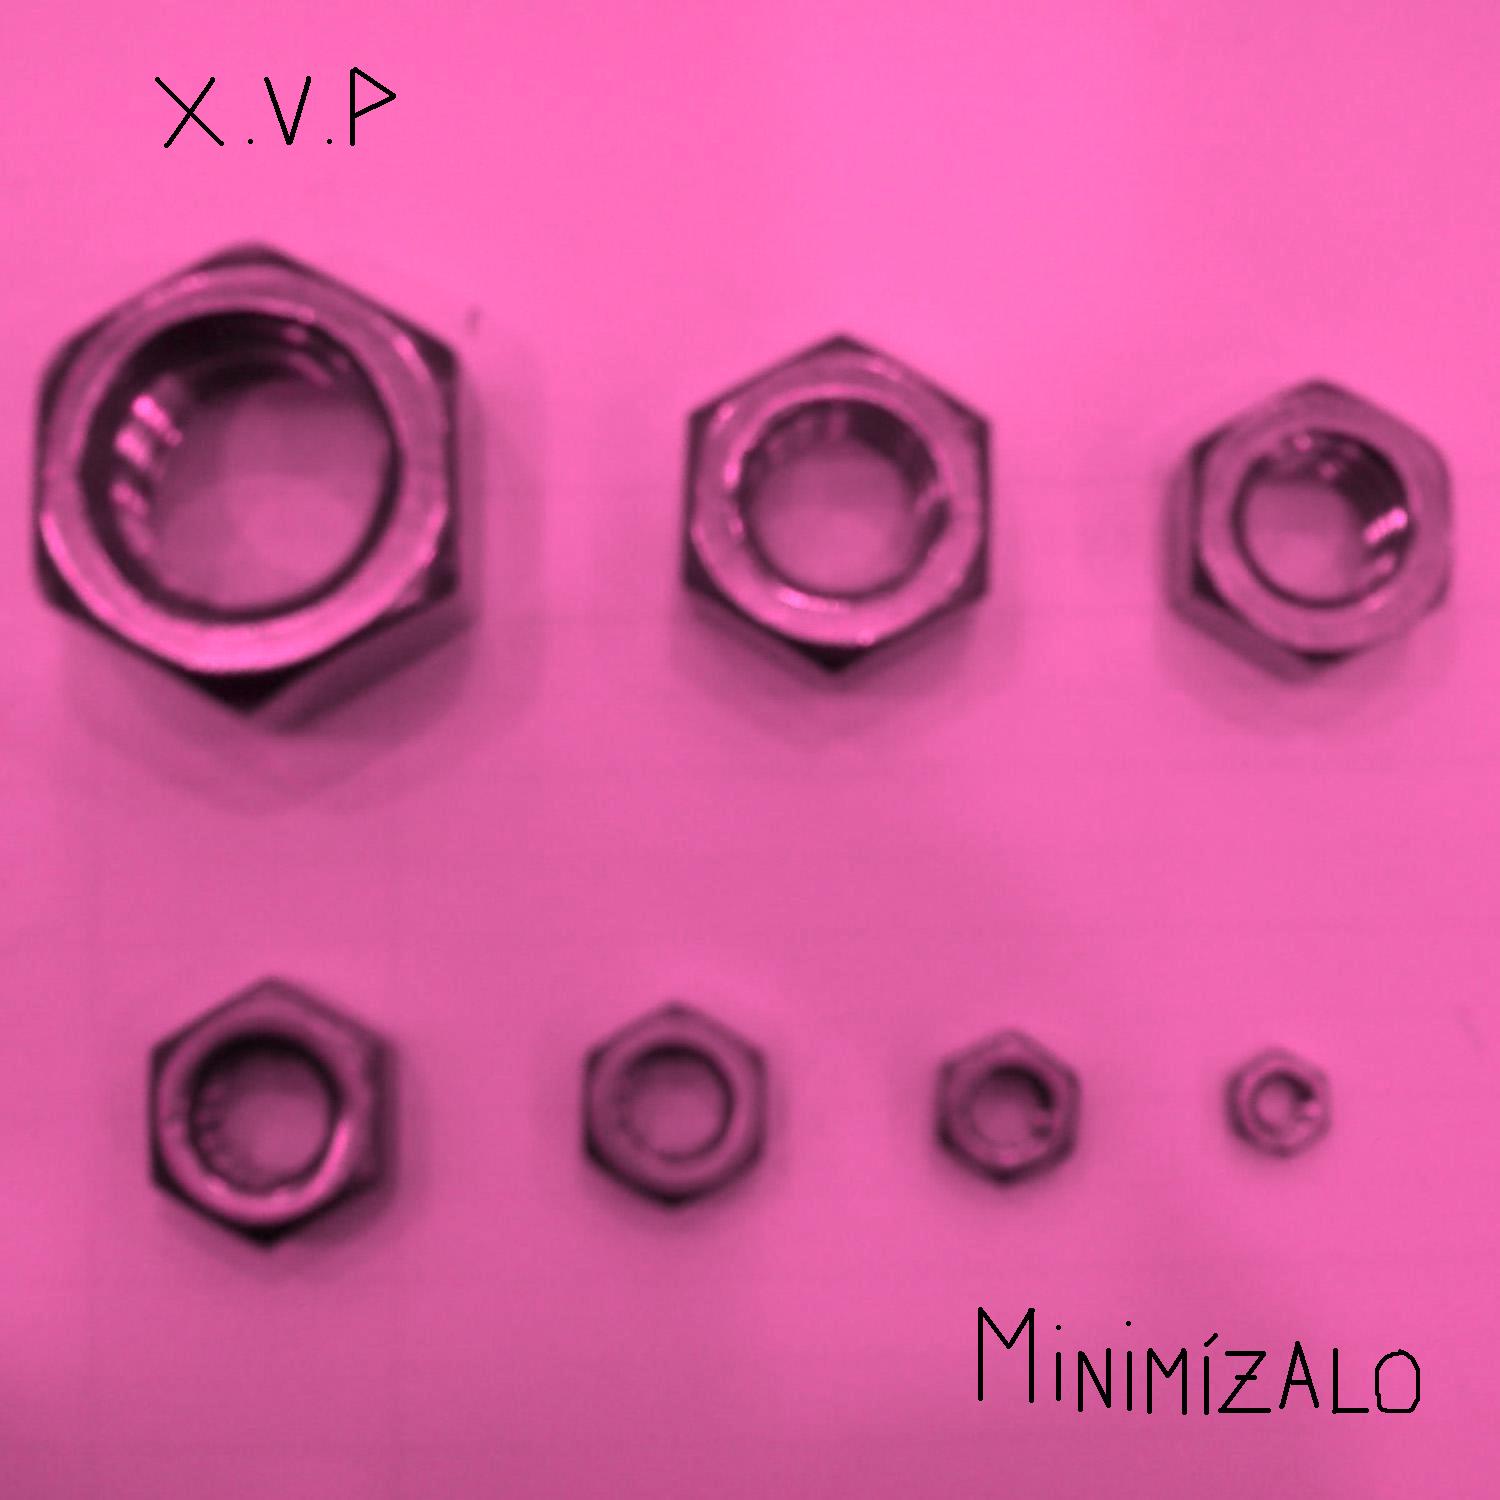 http://www.mixotic.net/mixes/143_-_XVP_-_Minimizalo/cover_large.jpg